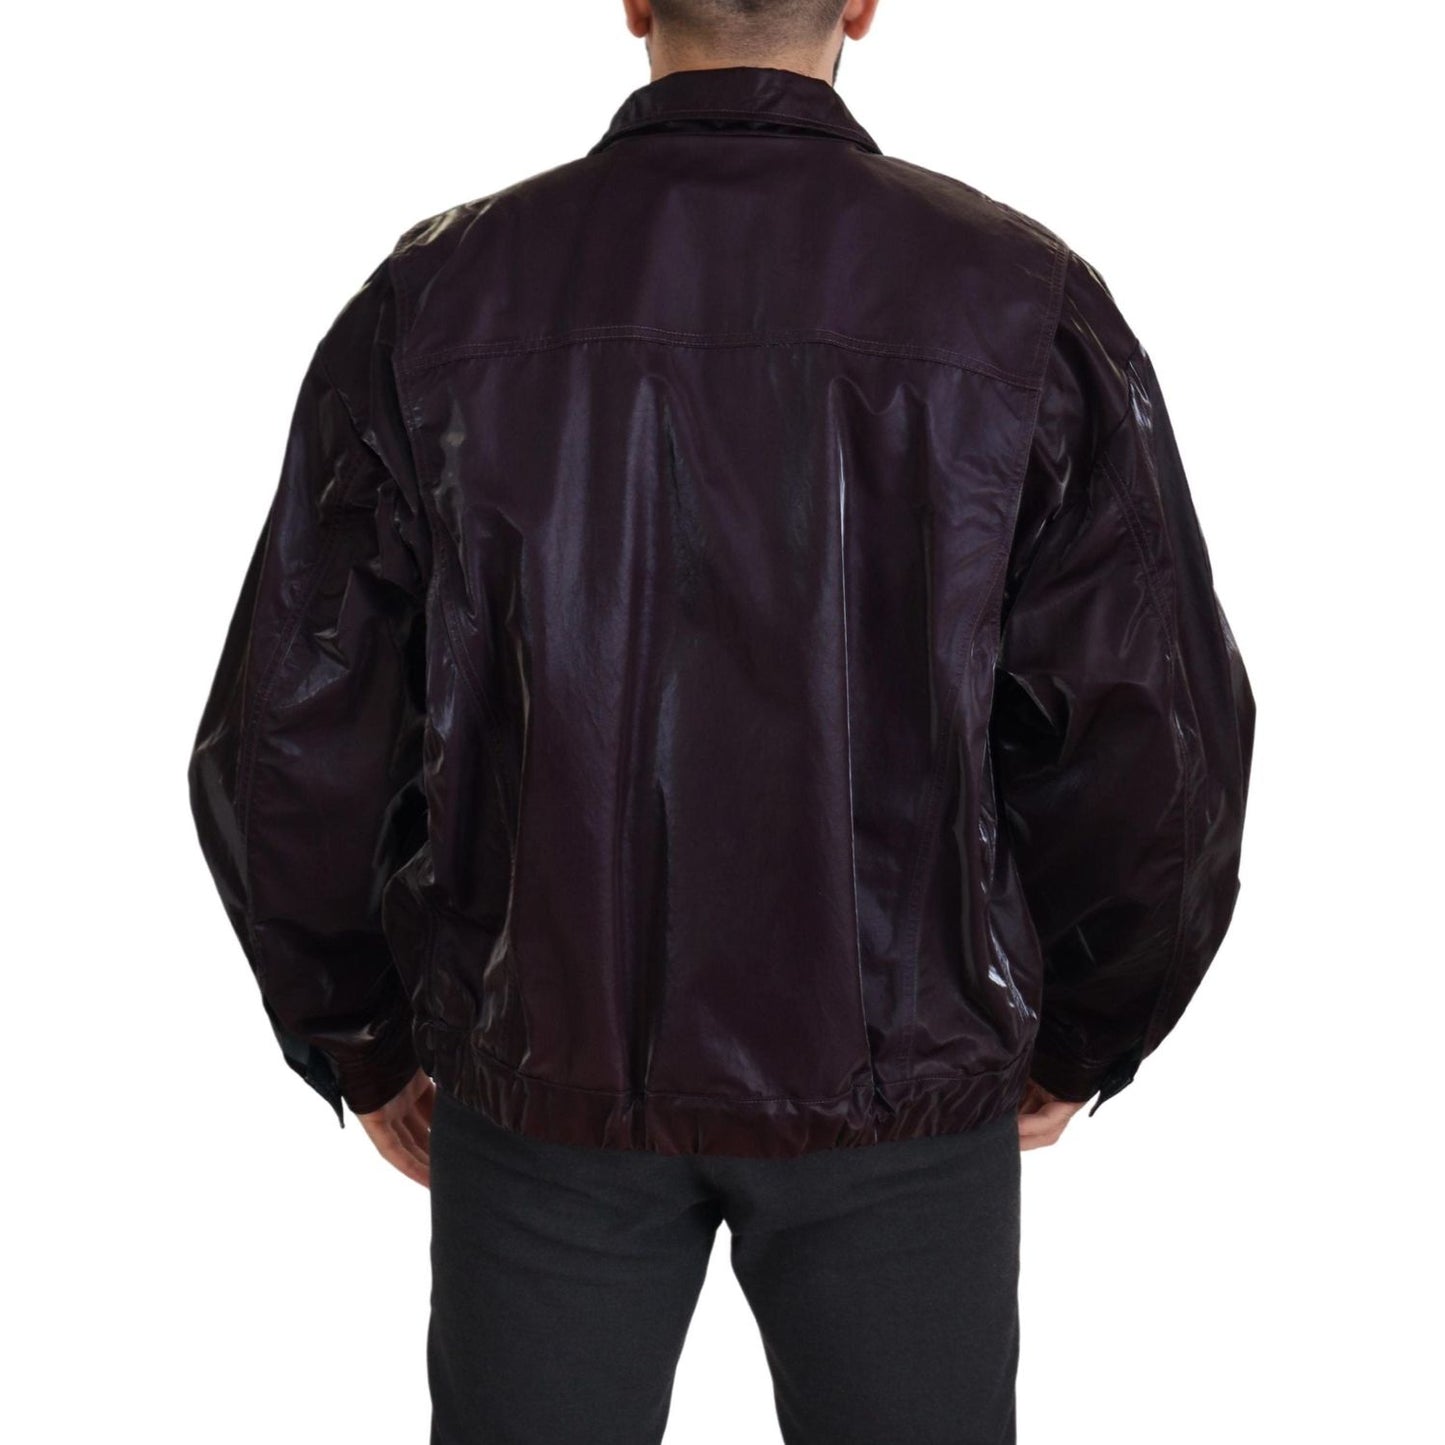 Dolce & Gabbana Elegant Bordeaux Collared Jacket bordeaux-nylon-collared-men-coat-jacket IMG_8278-scaled-26e1ba20-341.jpg